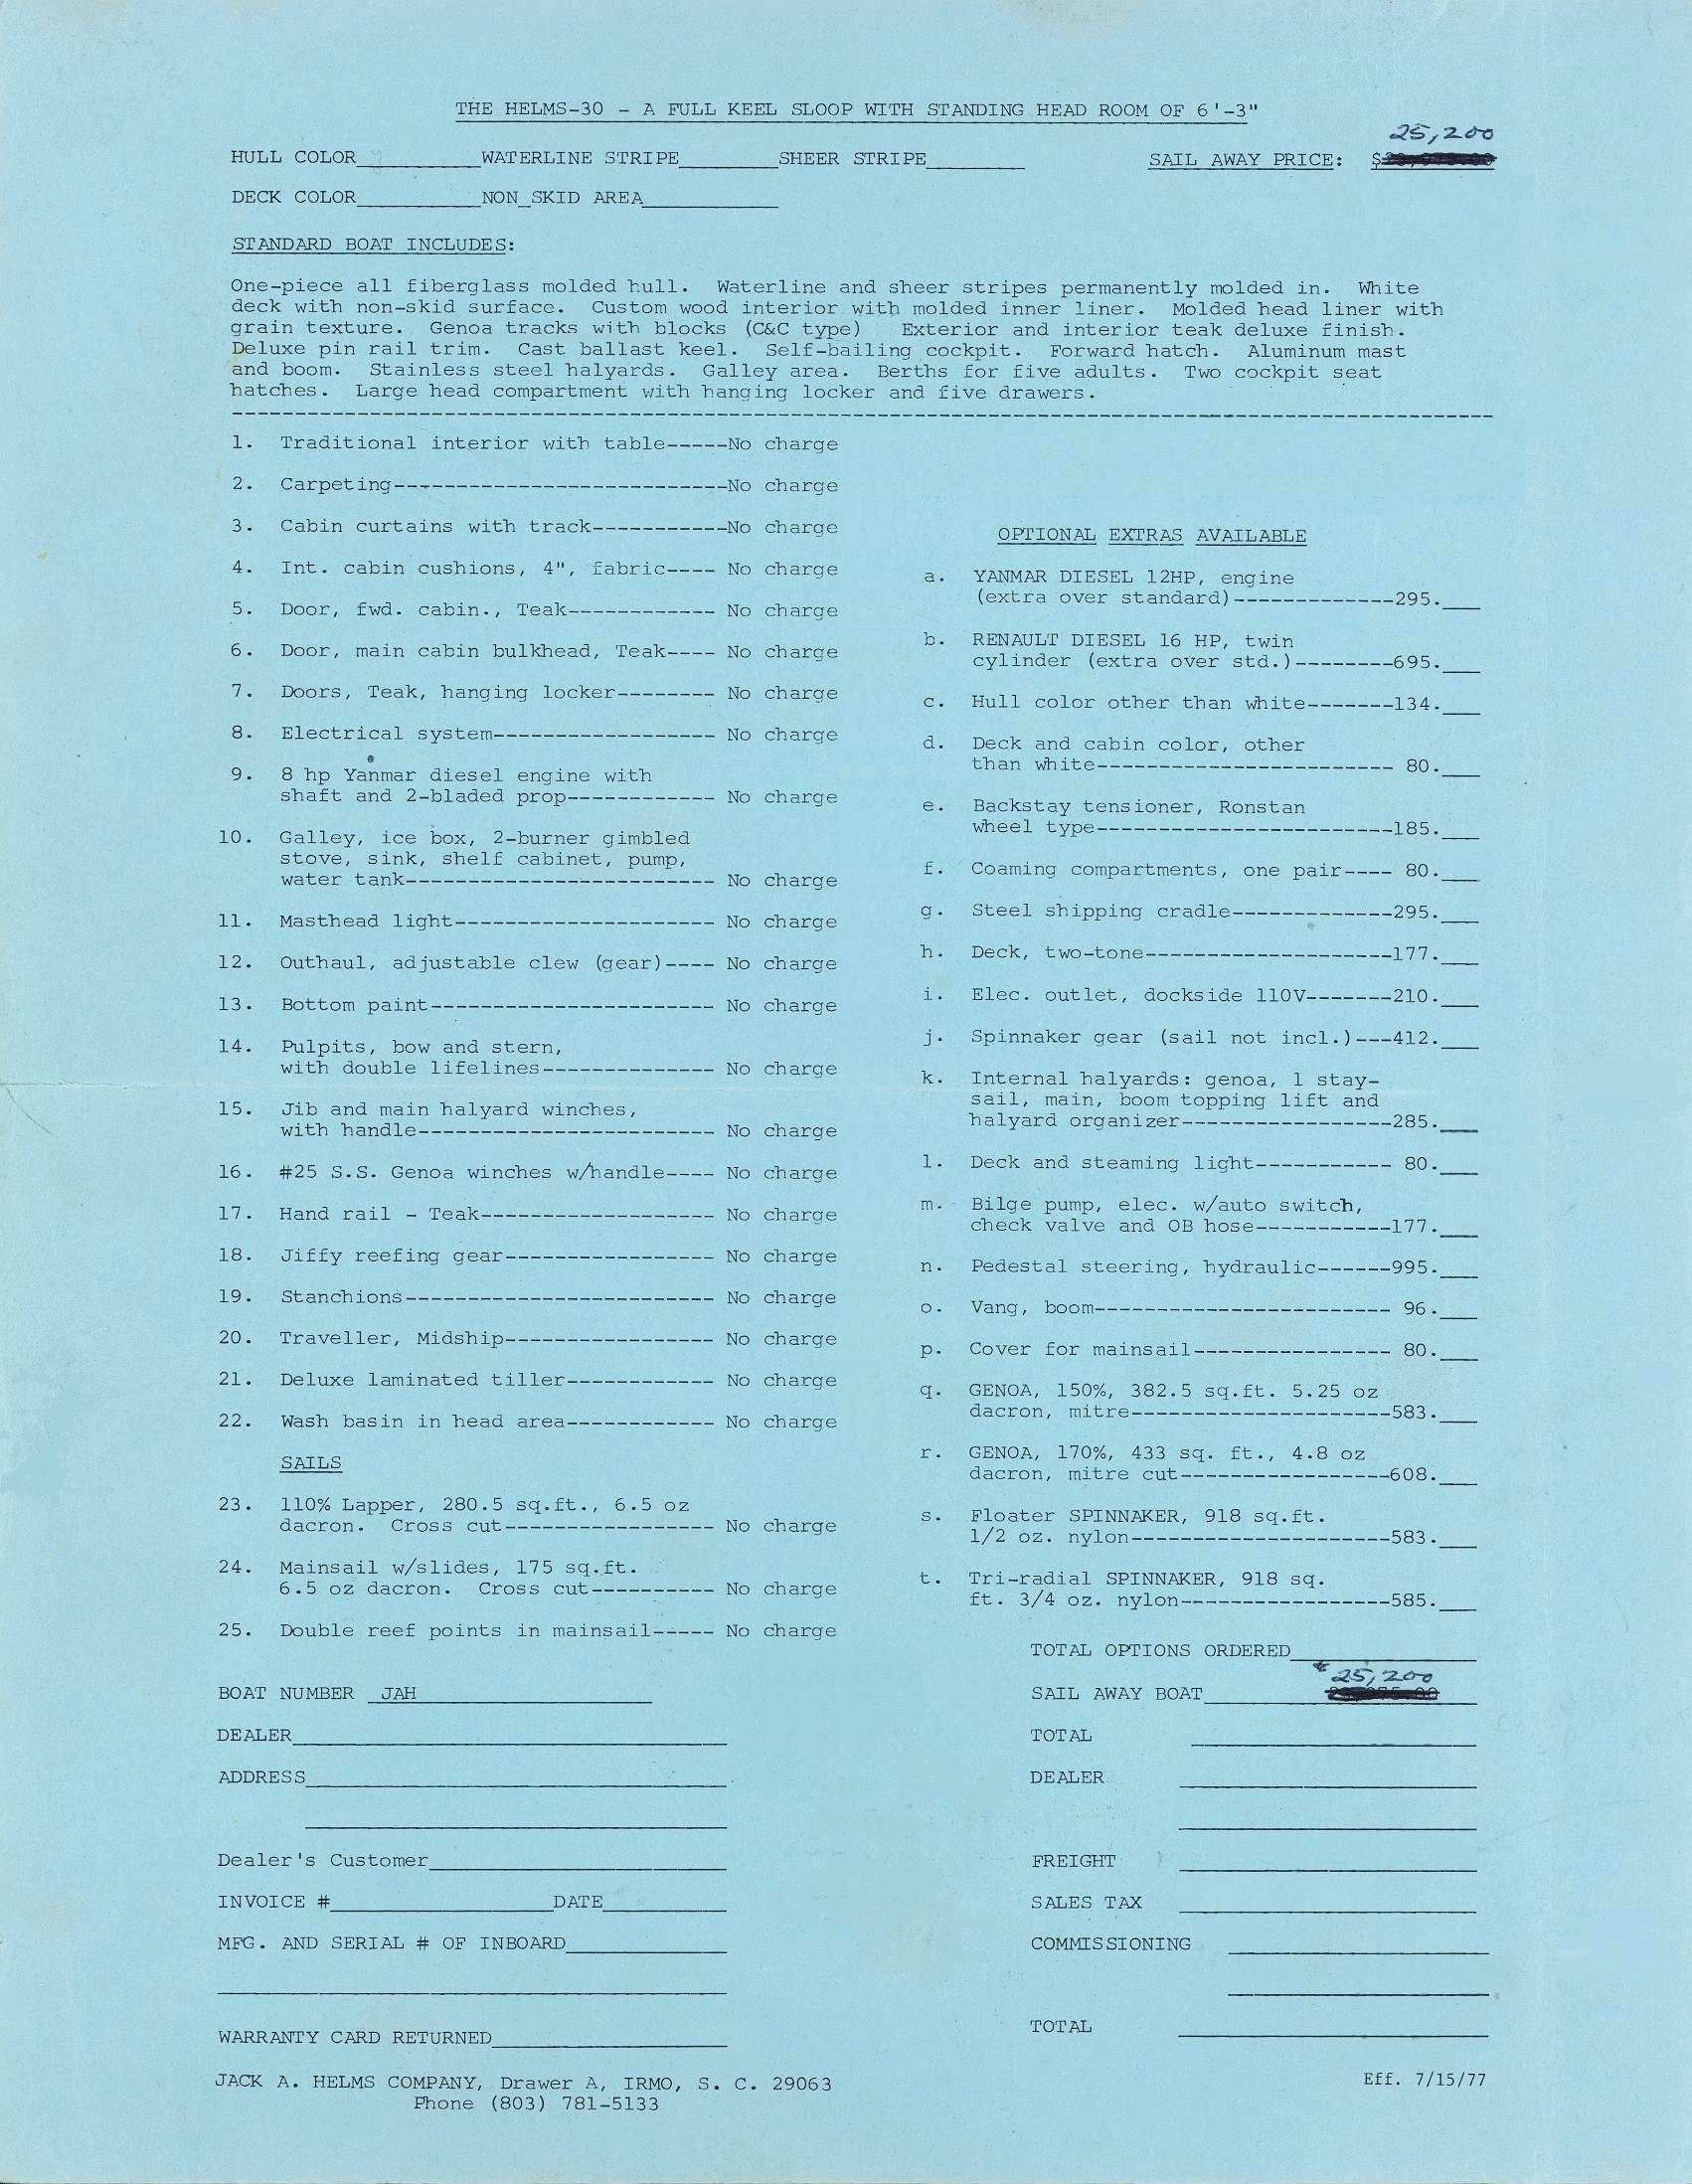 1977 Helms 30 Brochure Inside Price List